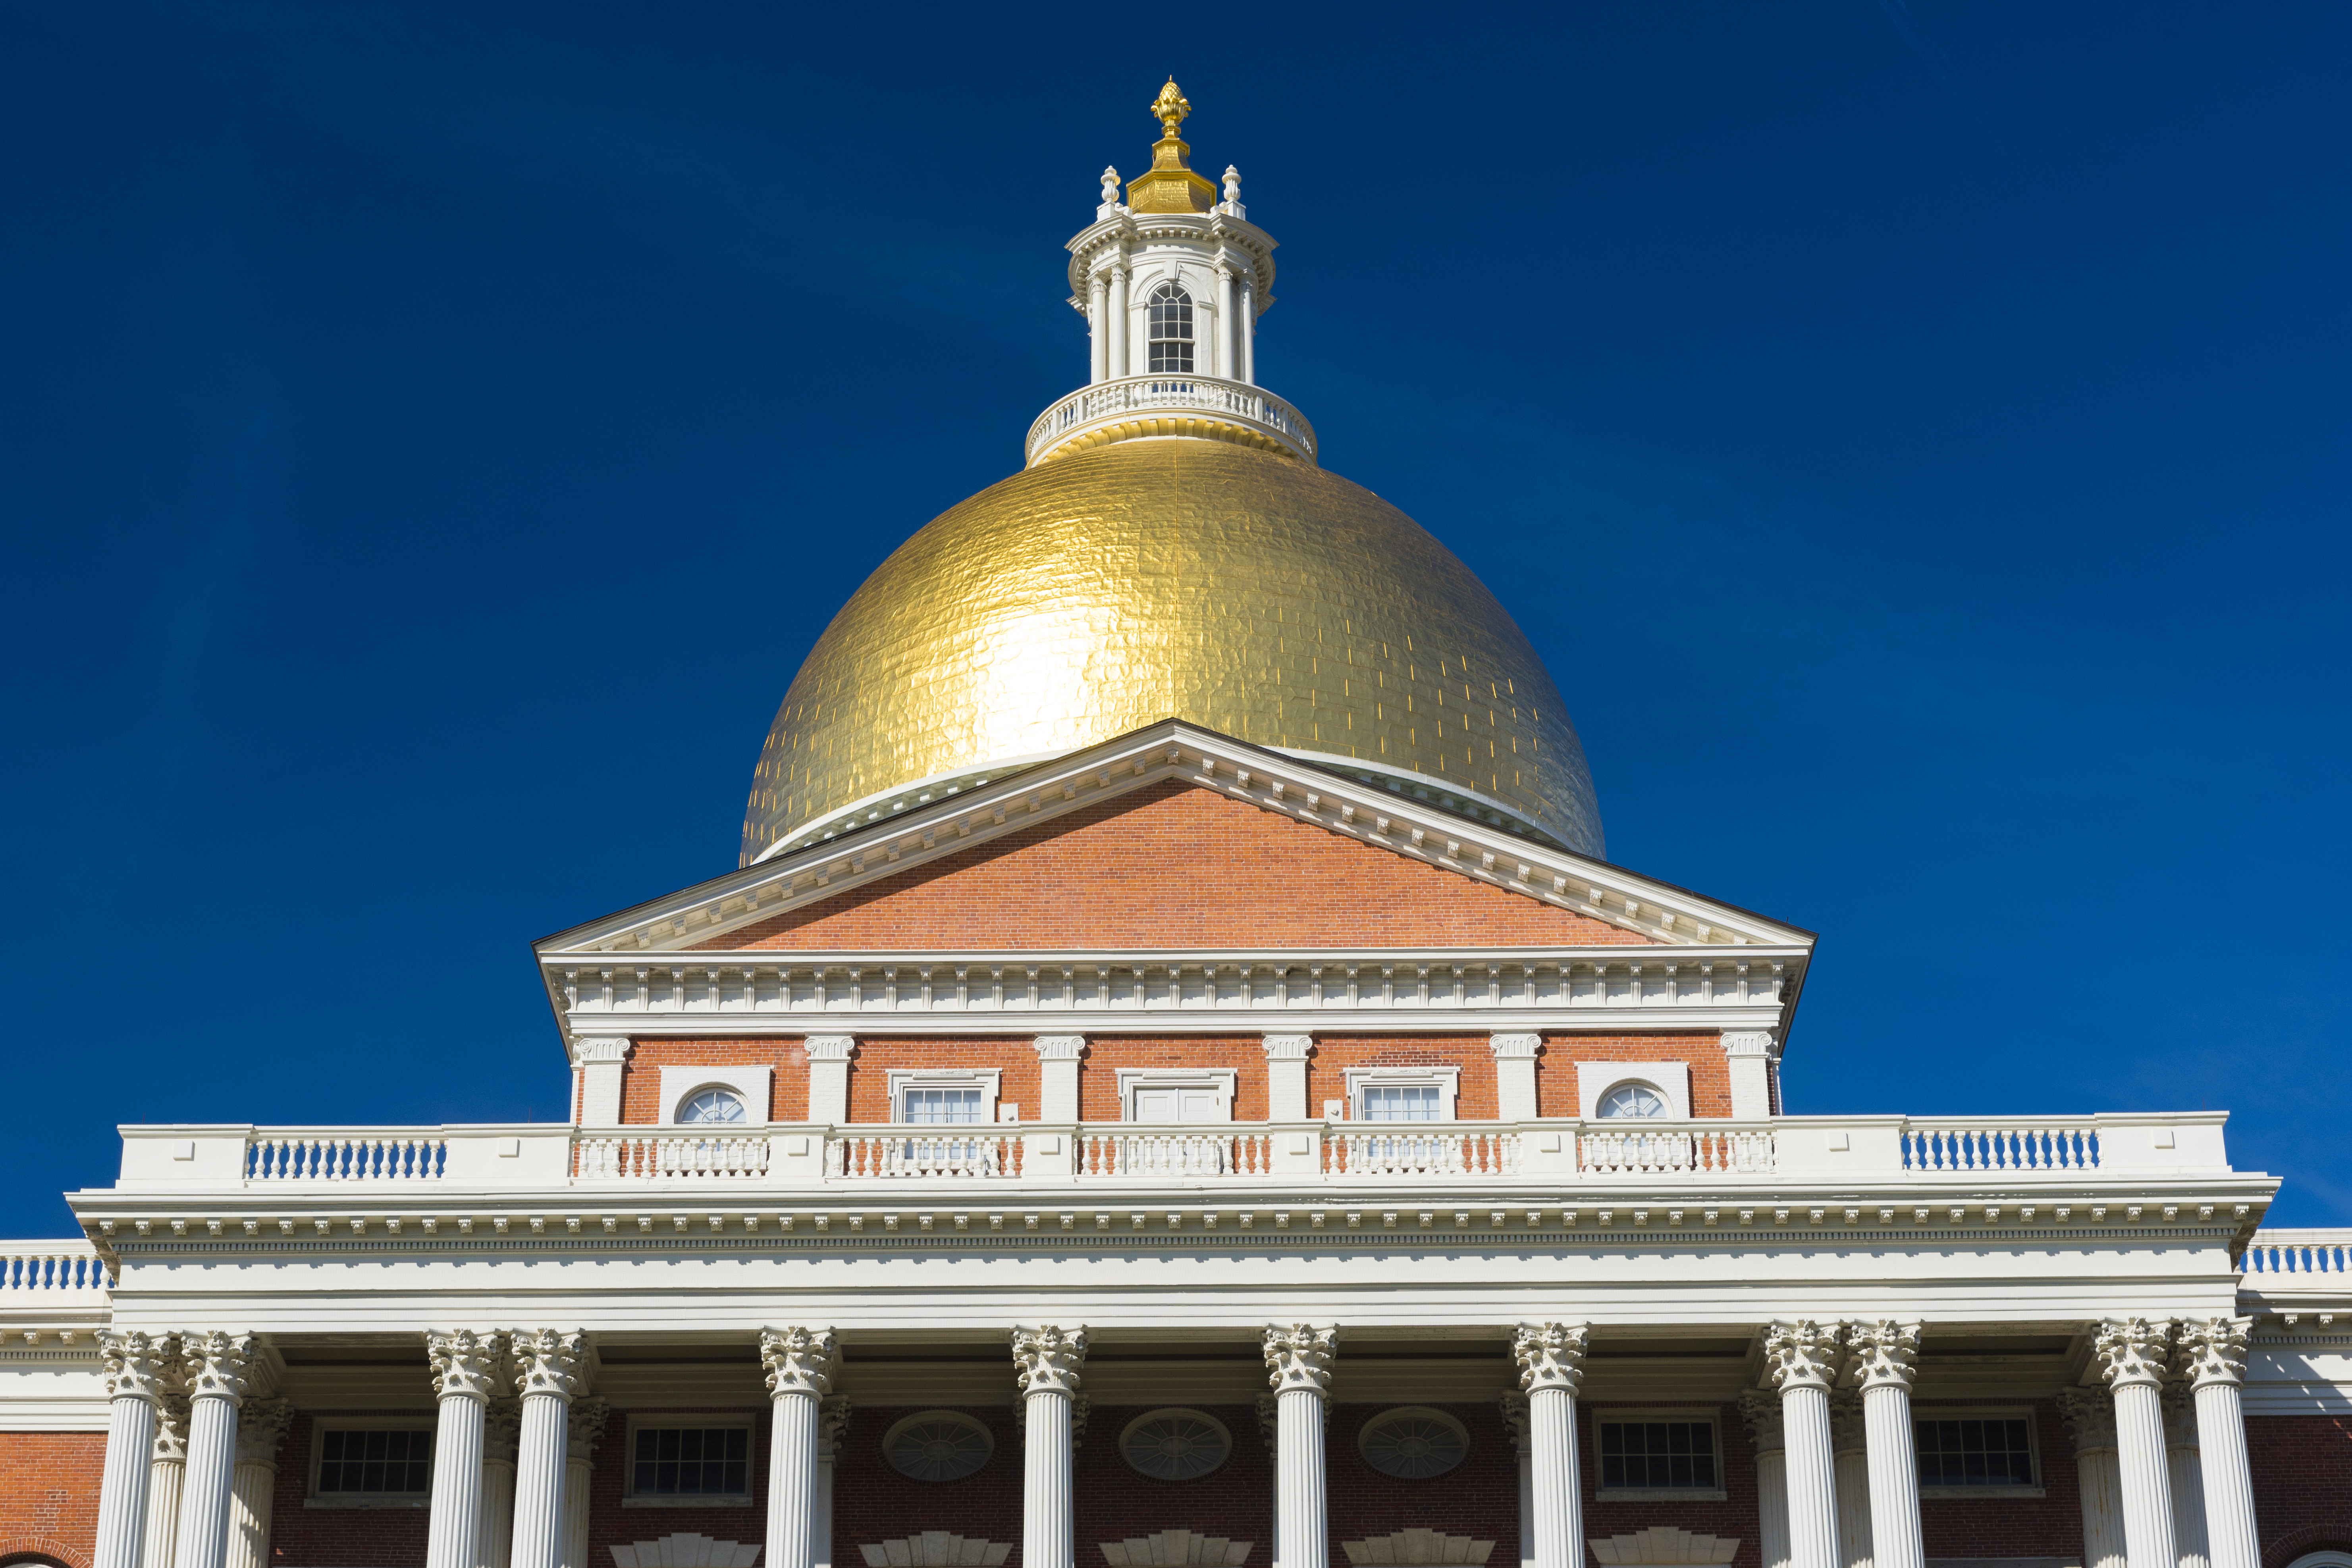 The Massachusetts State House in Boston, USA